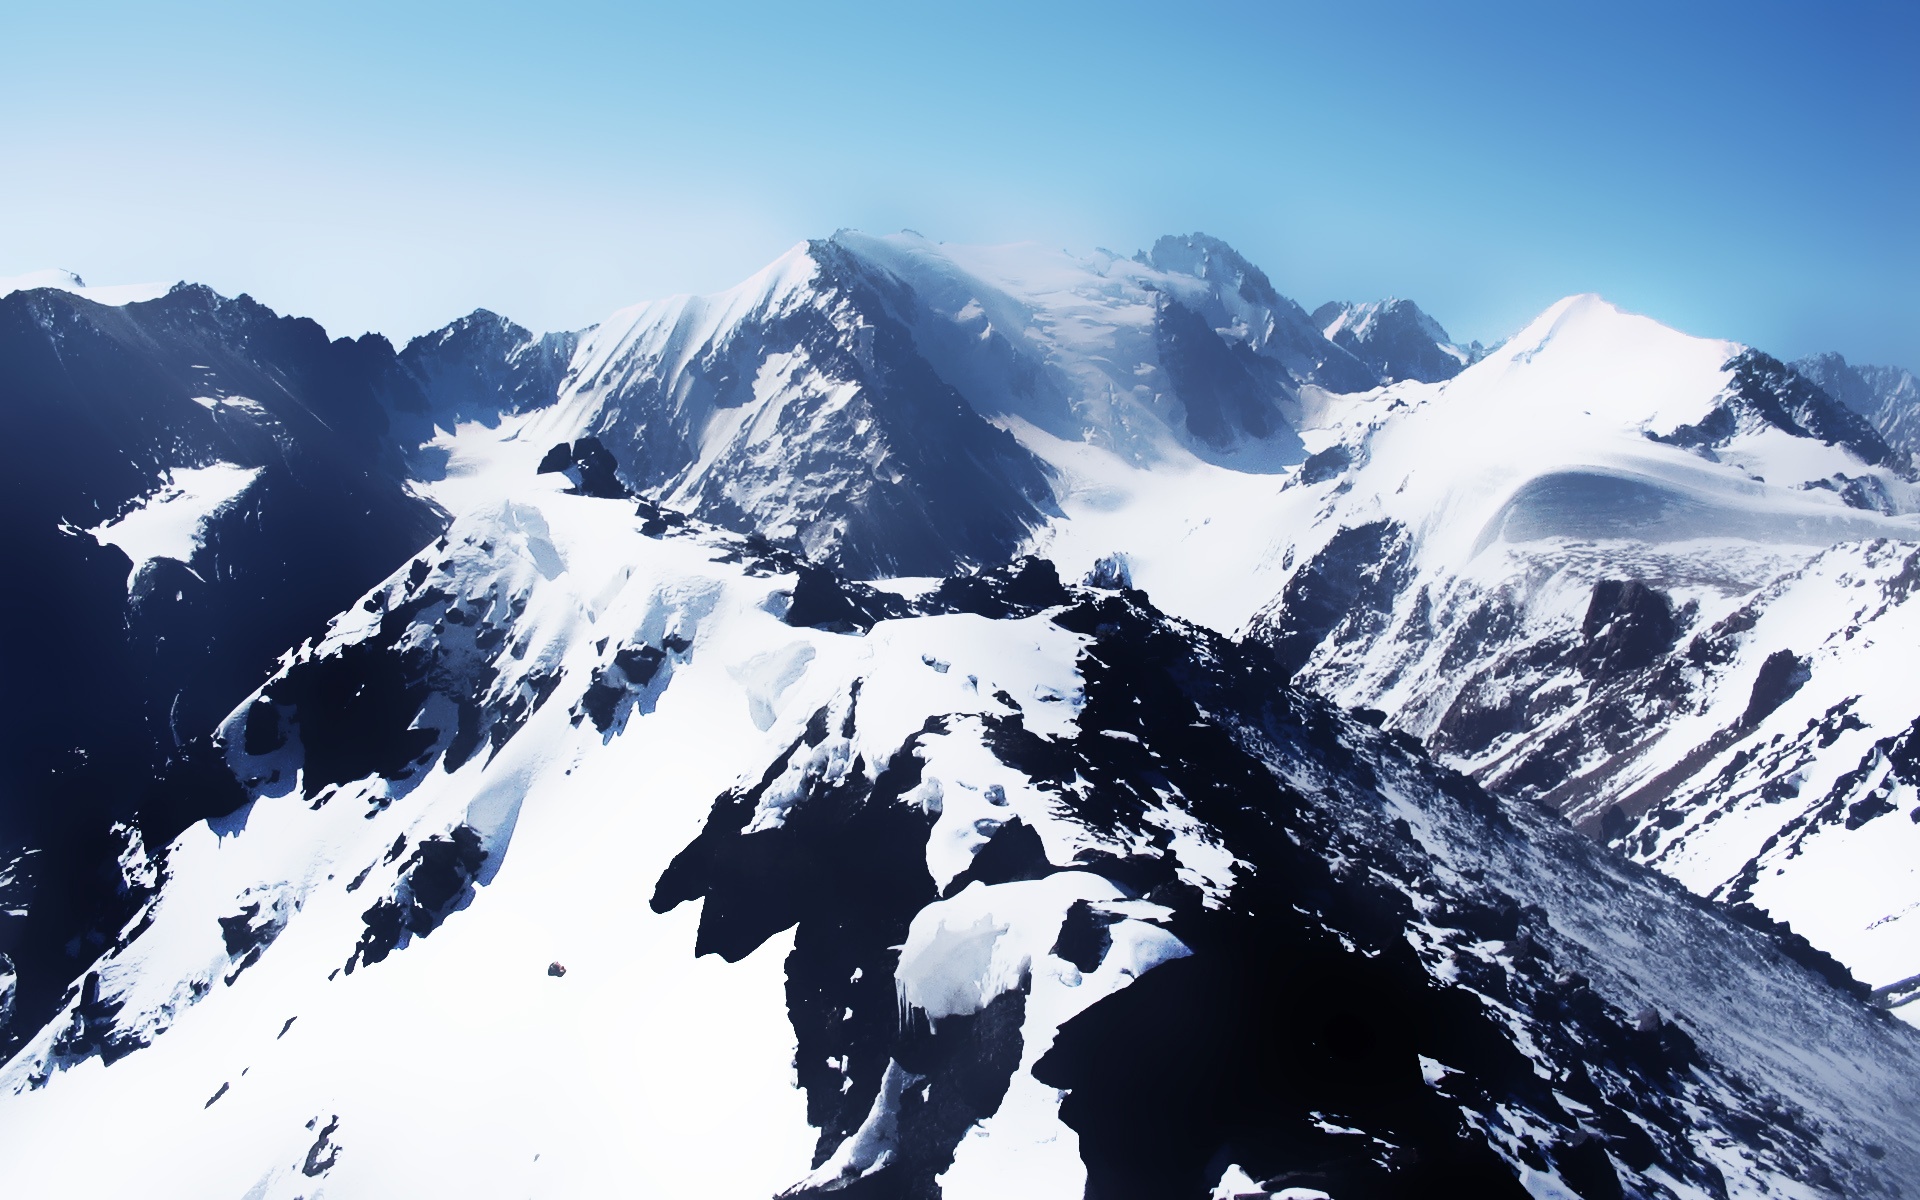 Snow Covered Mountains Over Desktop Wallpaper